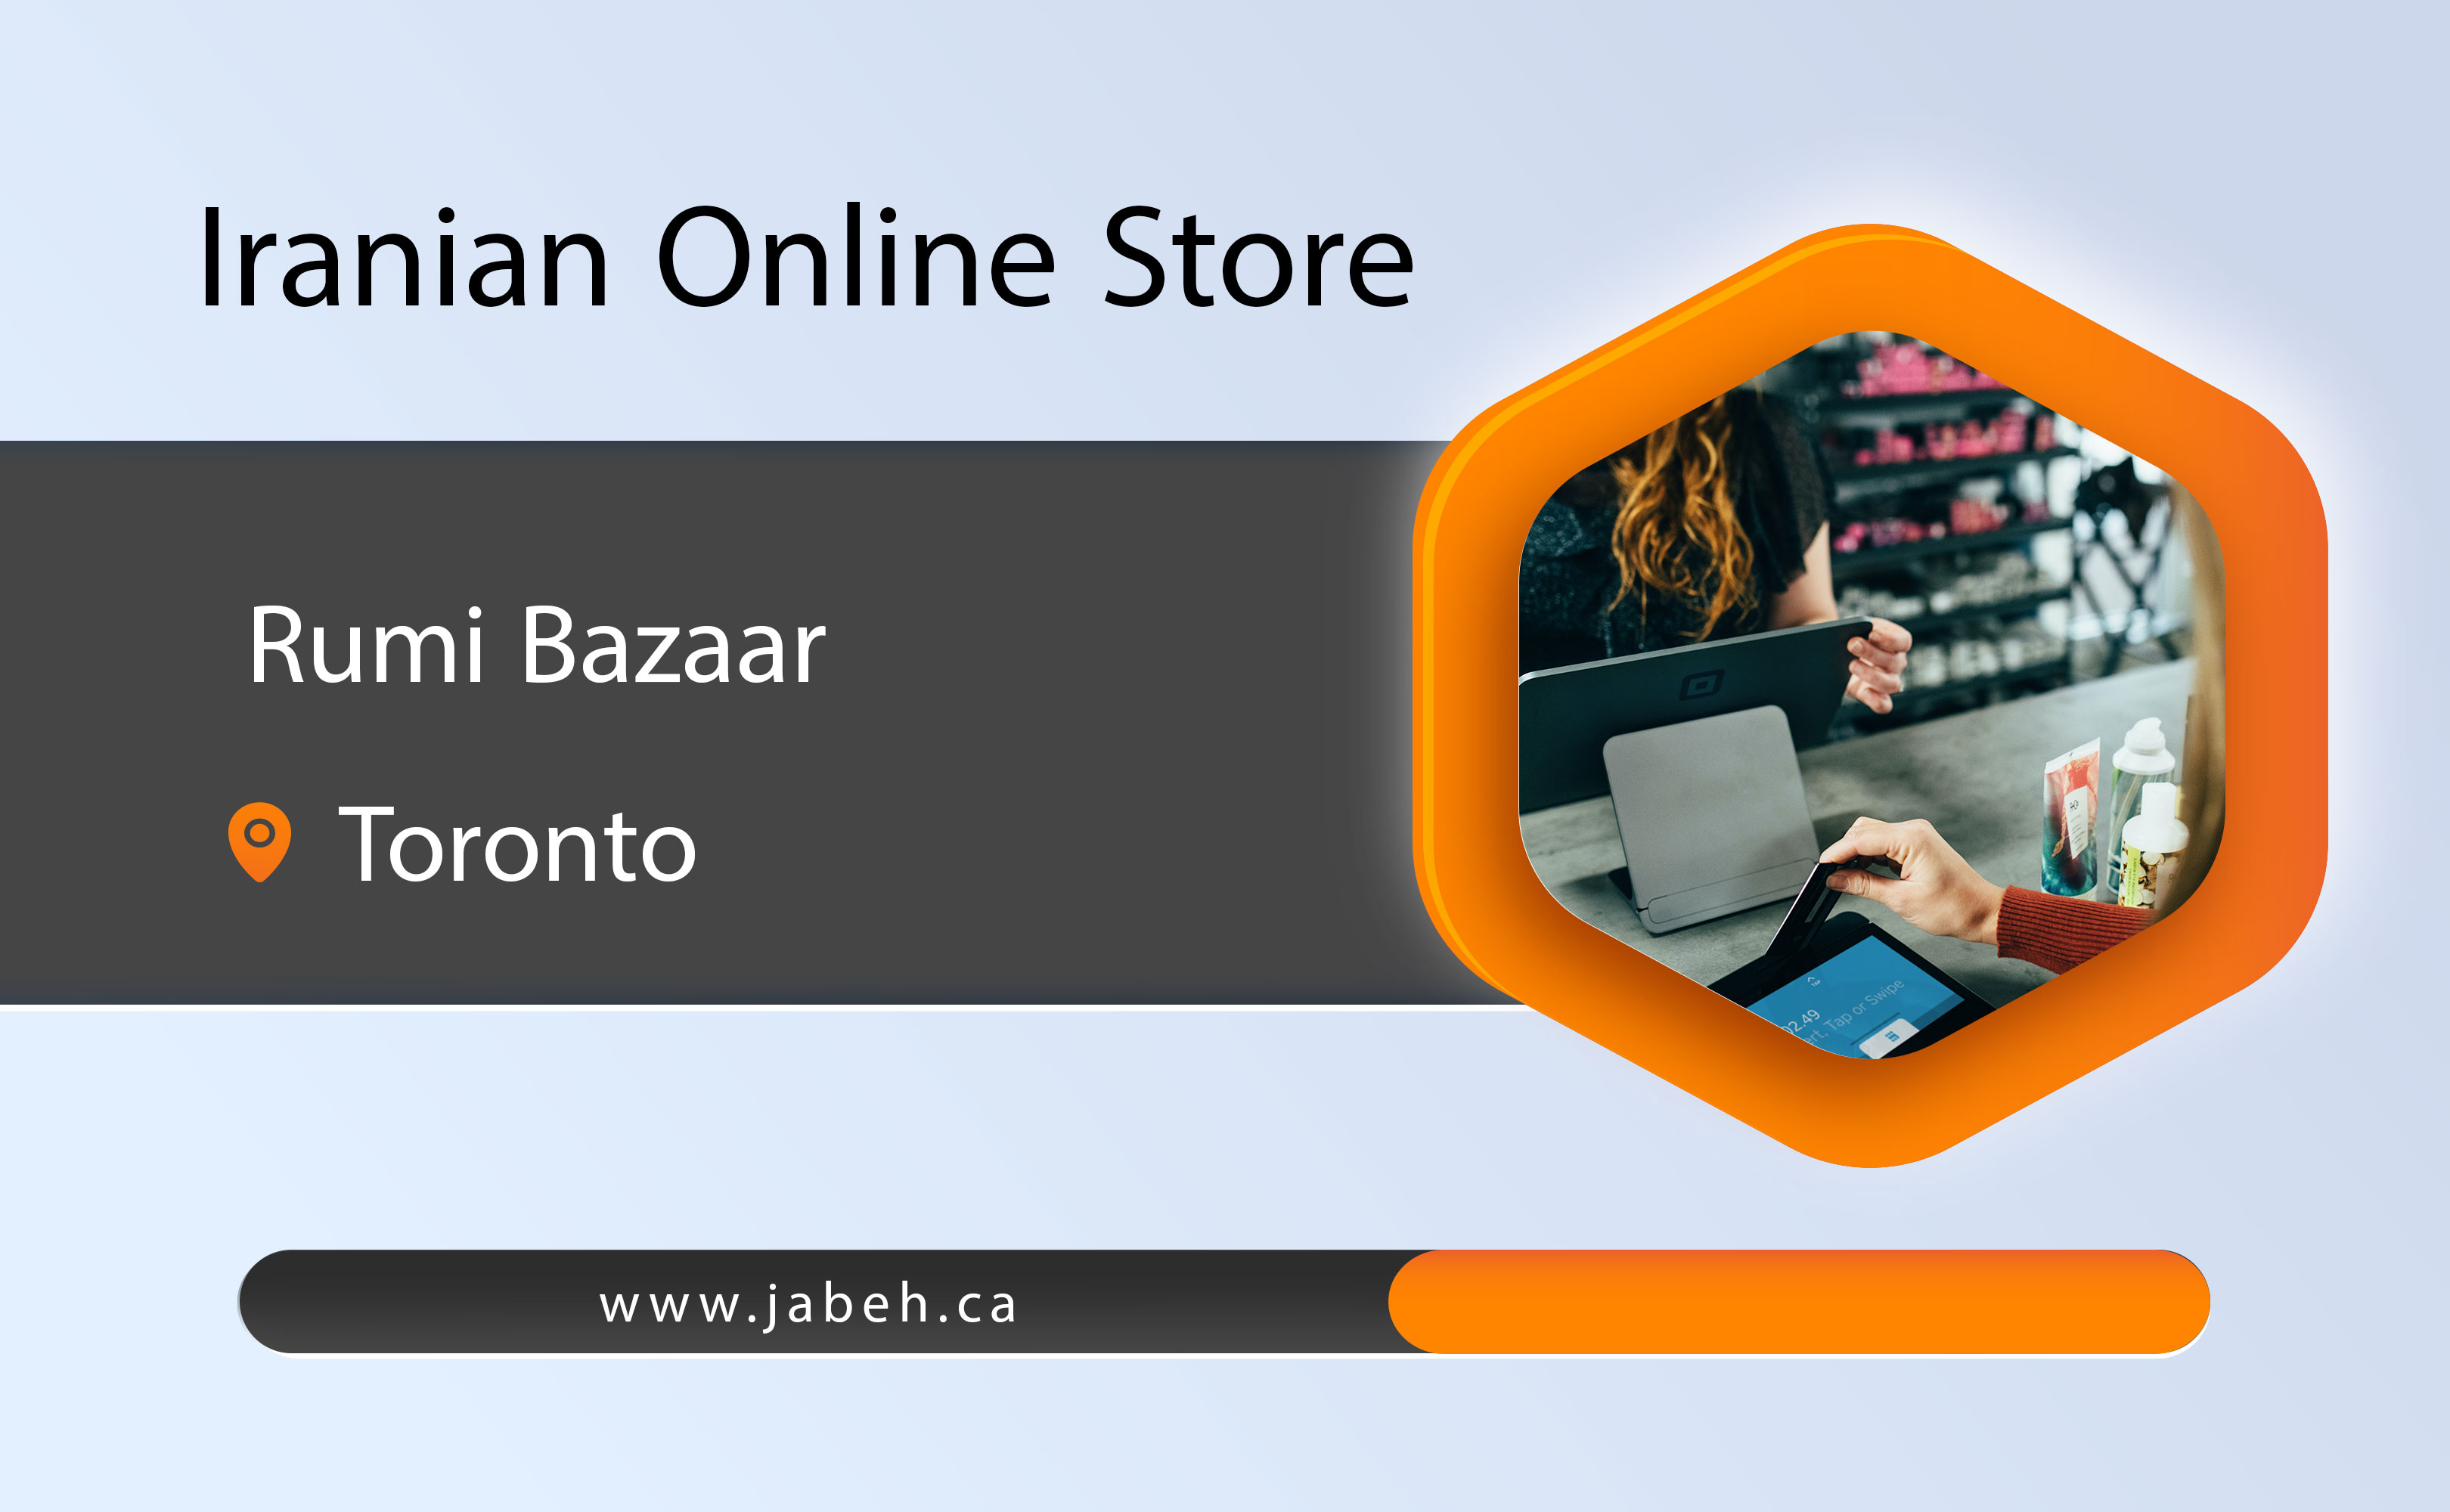 Rumi Bazar Iranian online store in Toronto